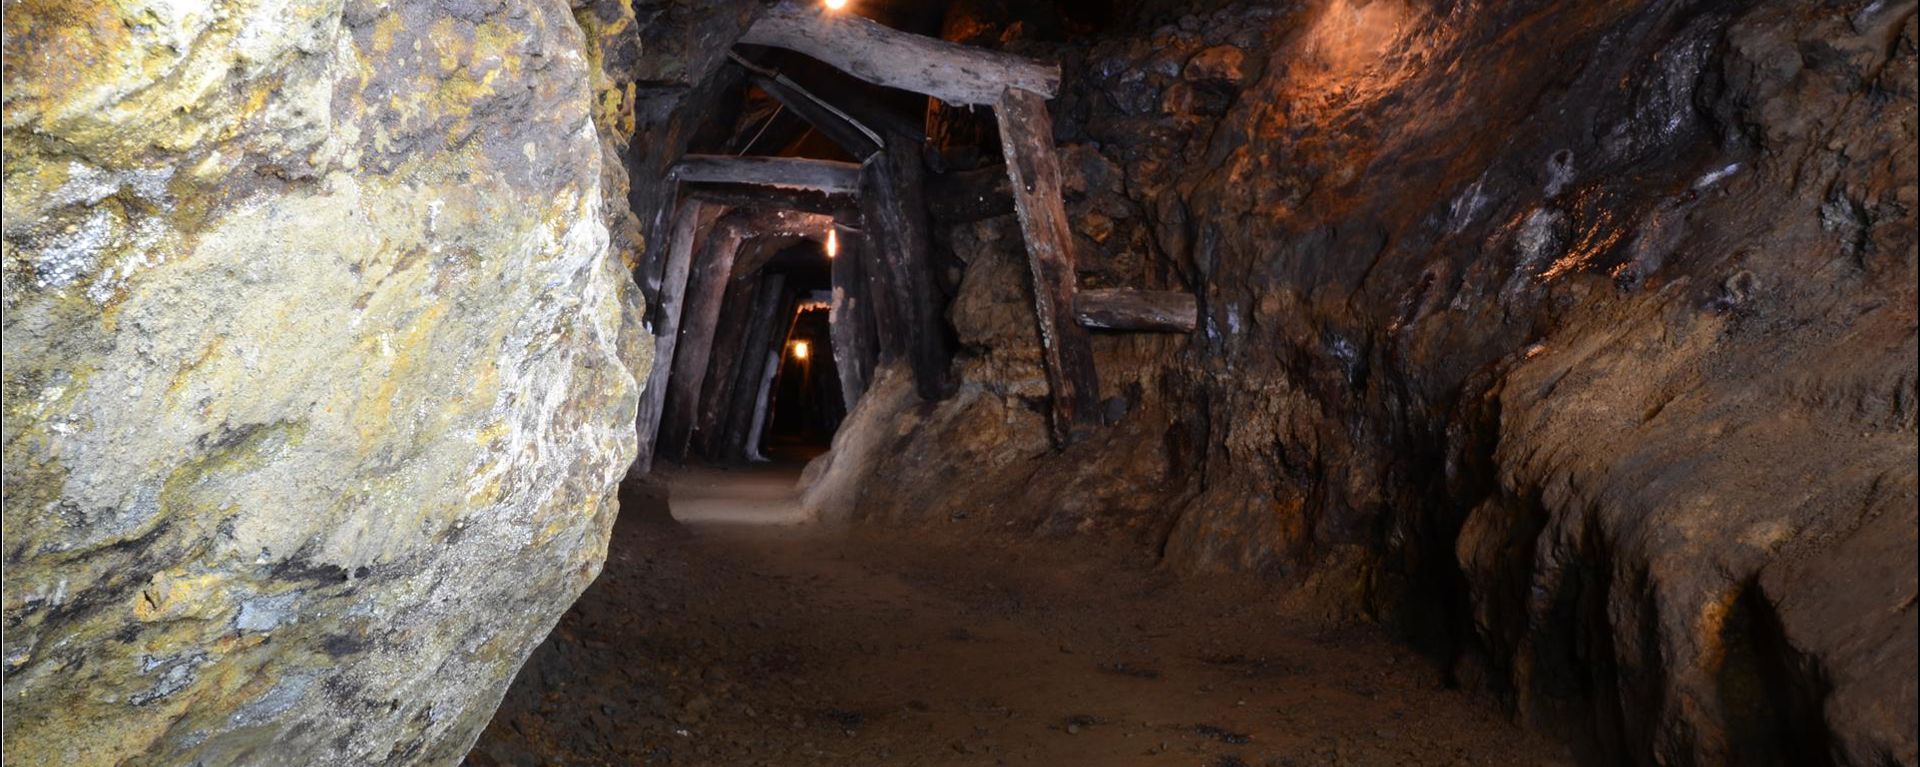 A tunnel of the Villanders mine